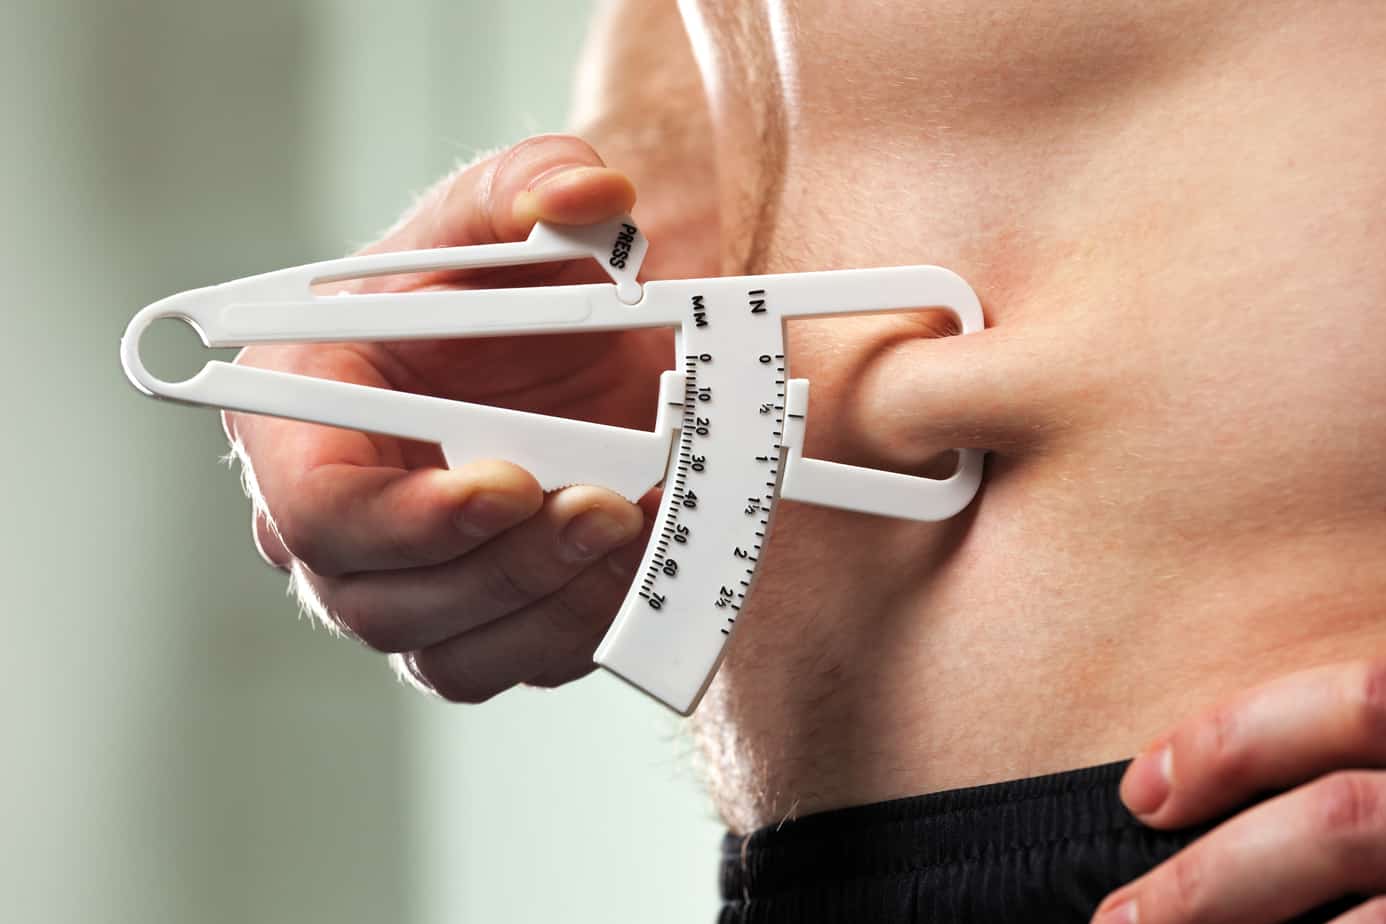 Why BMI is inaccurate skinfold caliper